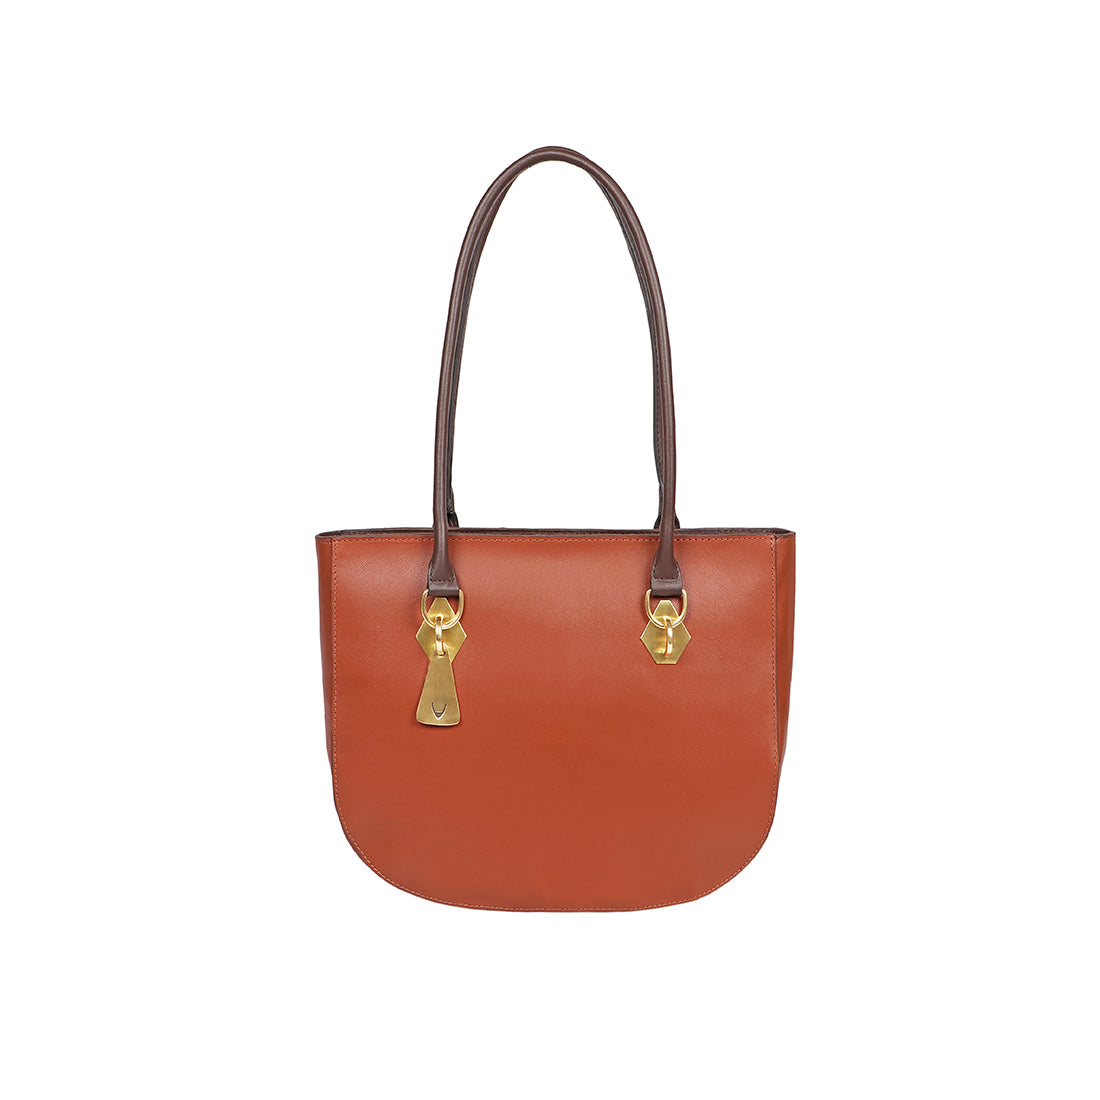 Buy Tan Camila Sb 01 Sling Bag Online - Hidesign